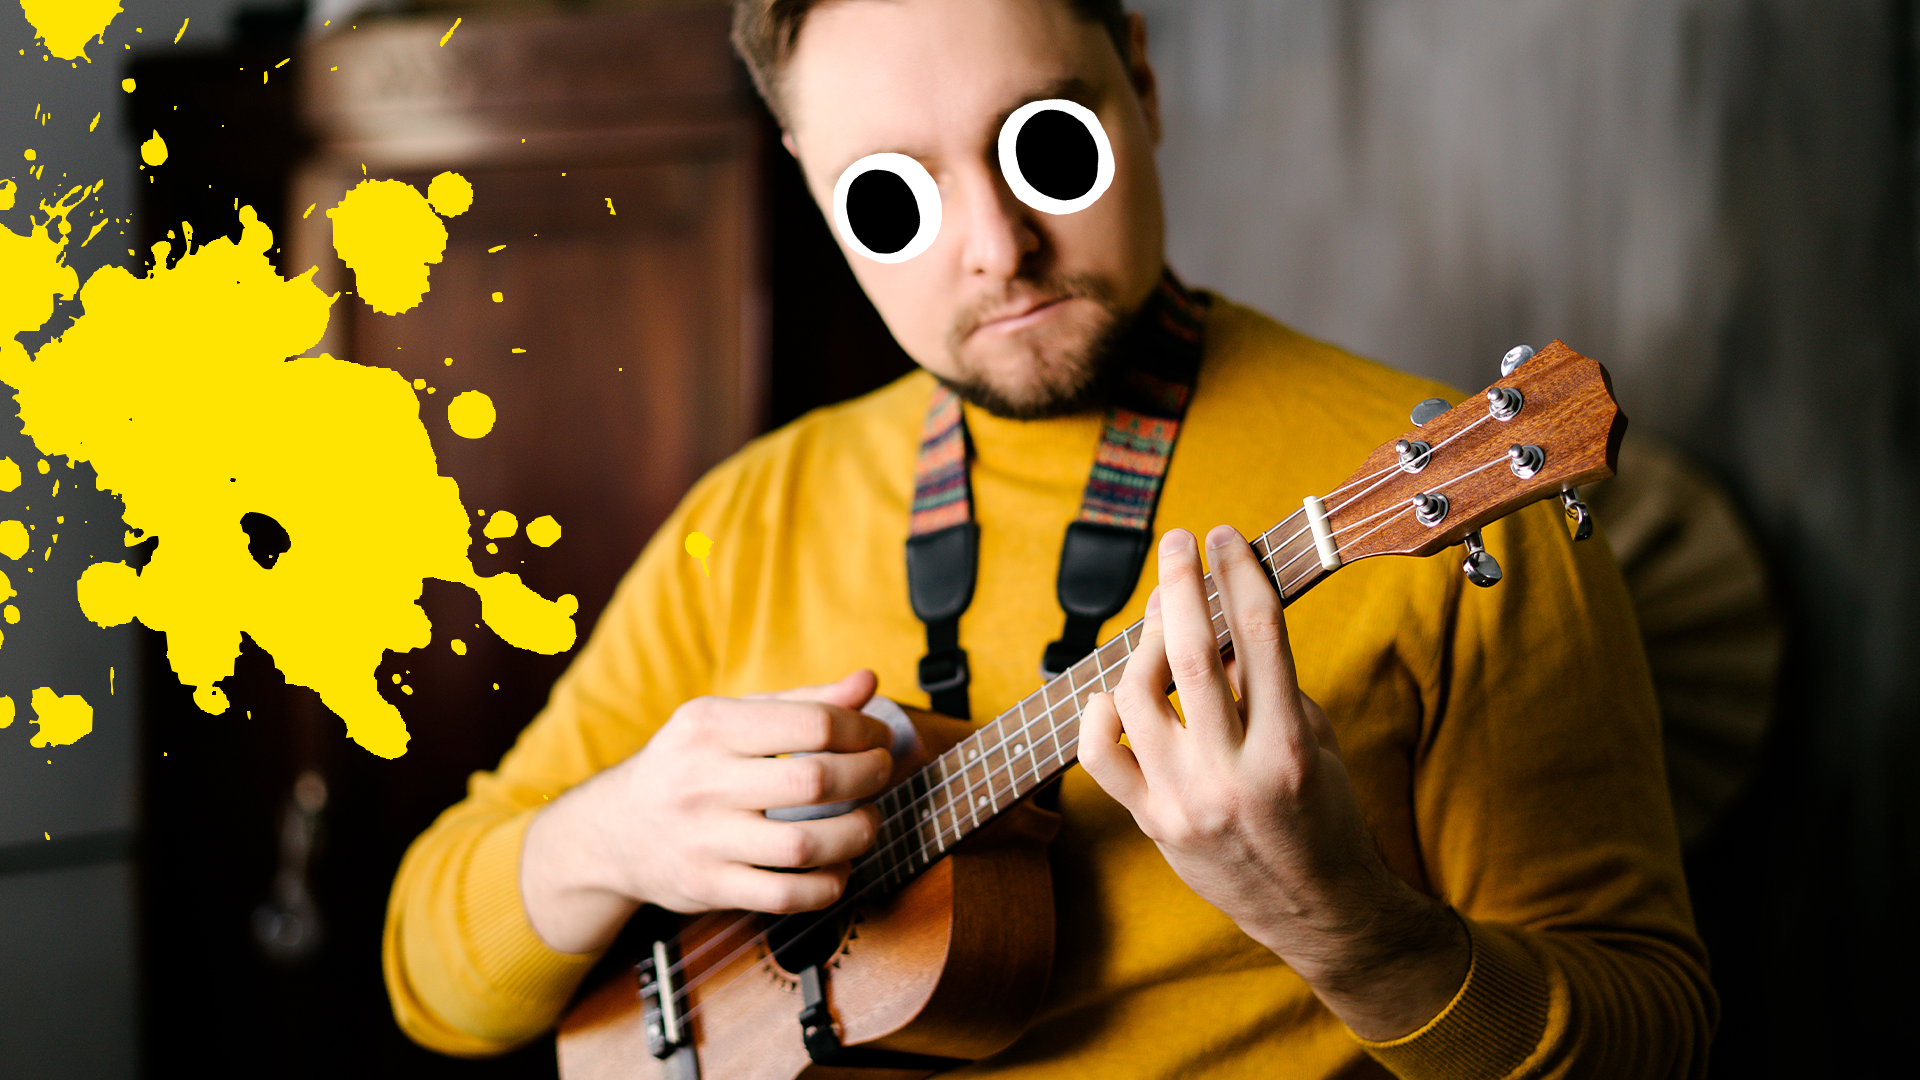 Man playing ukulele with yellow splat